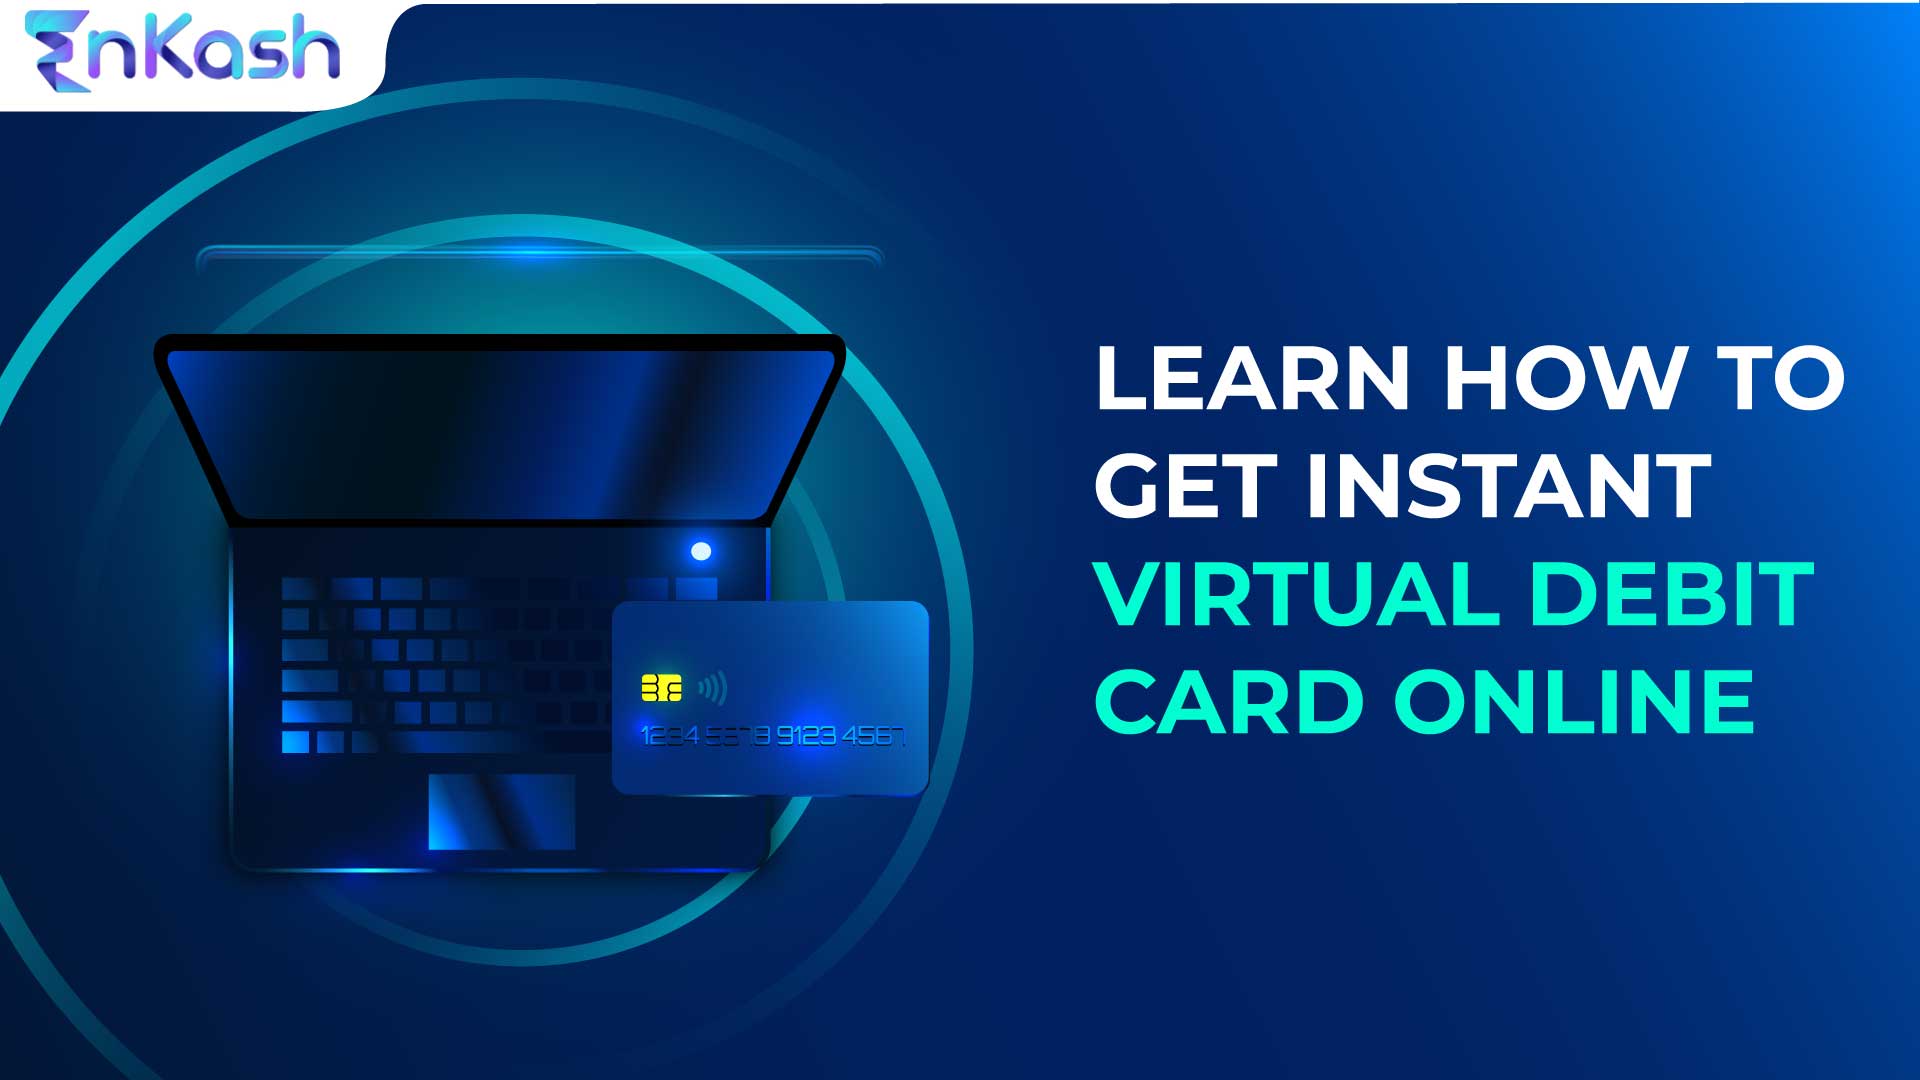 Instant virtual debit card online